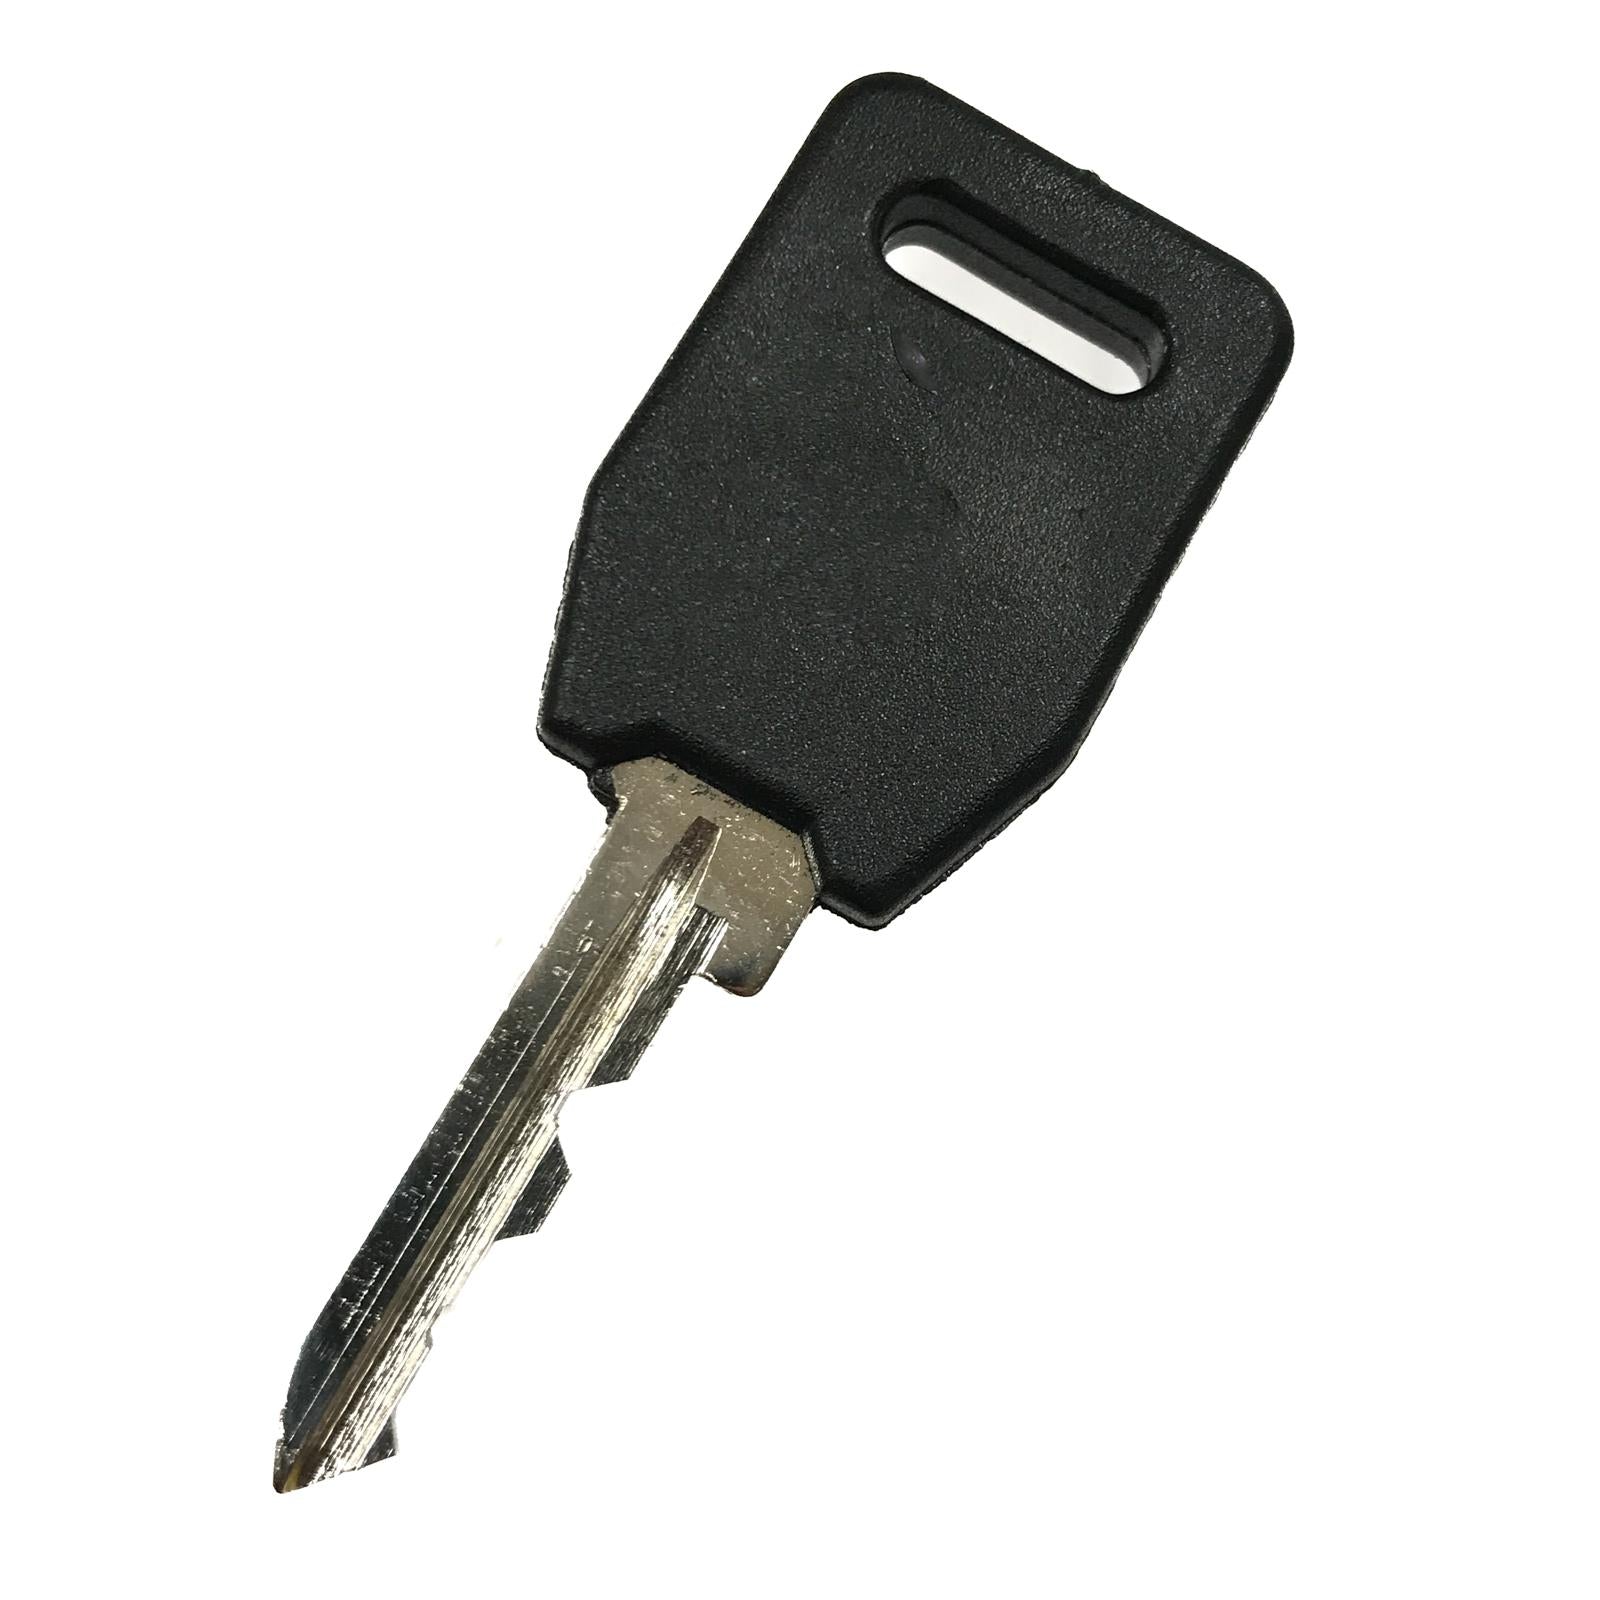 Skoda Replacement Car Key Cut to Code 4AB1-4AB2780 Favorite Felicia Forman Skoda Vehicle Keys Skoda 100037